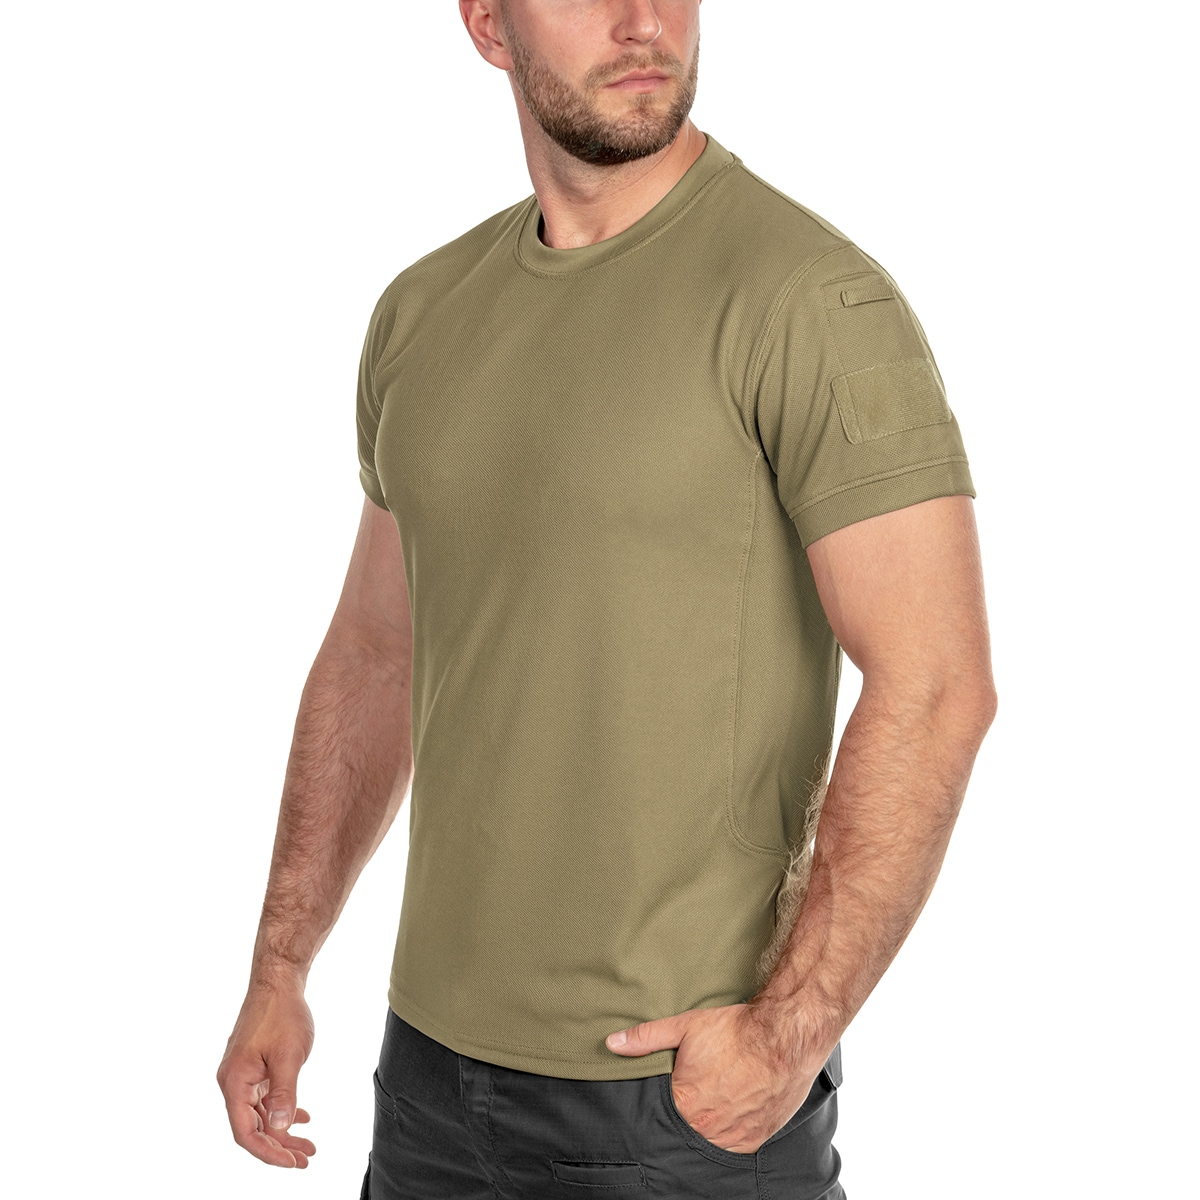 Koszulka termoaktywna Helikon Tactical T-shirt TopCool - Khaki